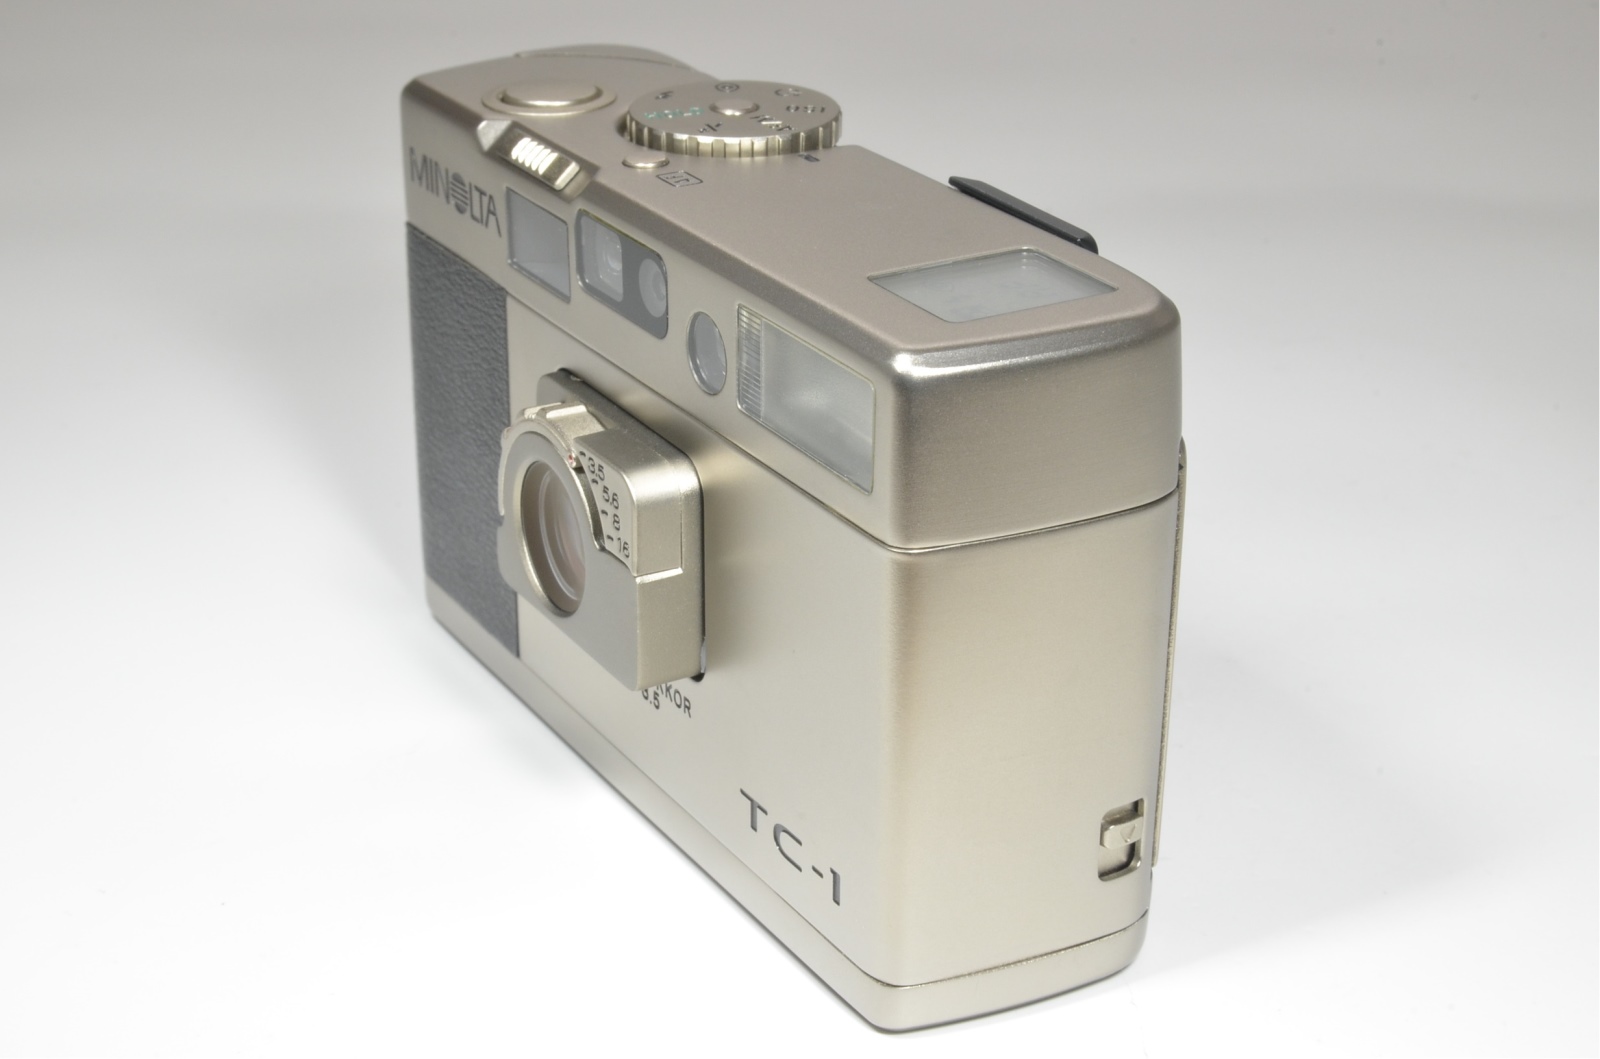 minolta tc-1 p&s film camera 28mm f3.5 with half leather case